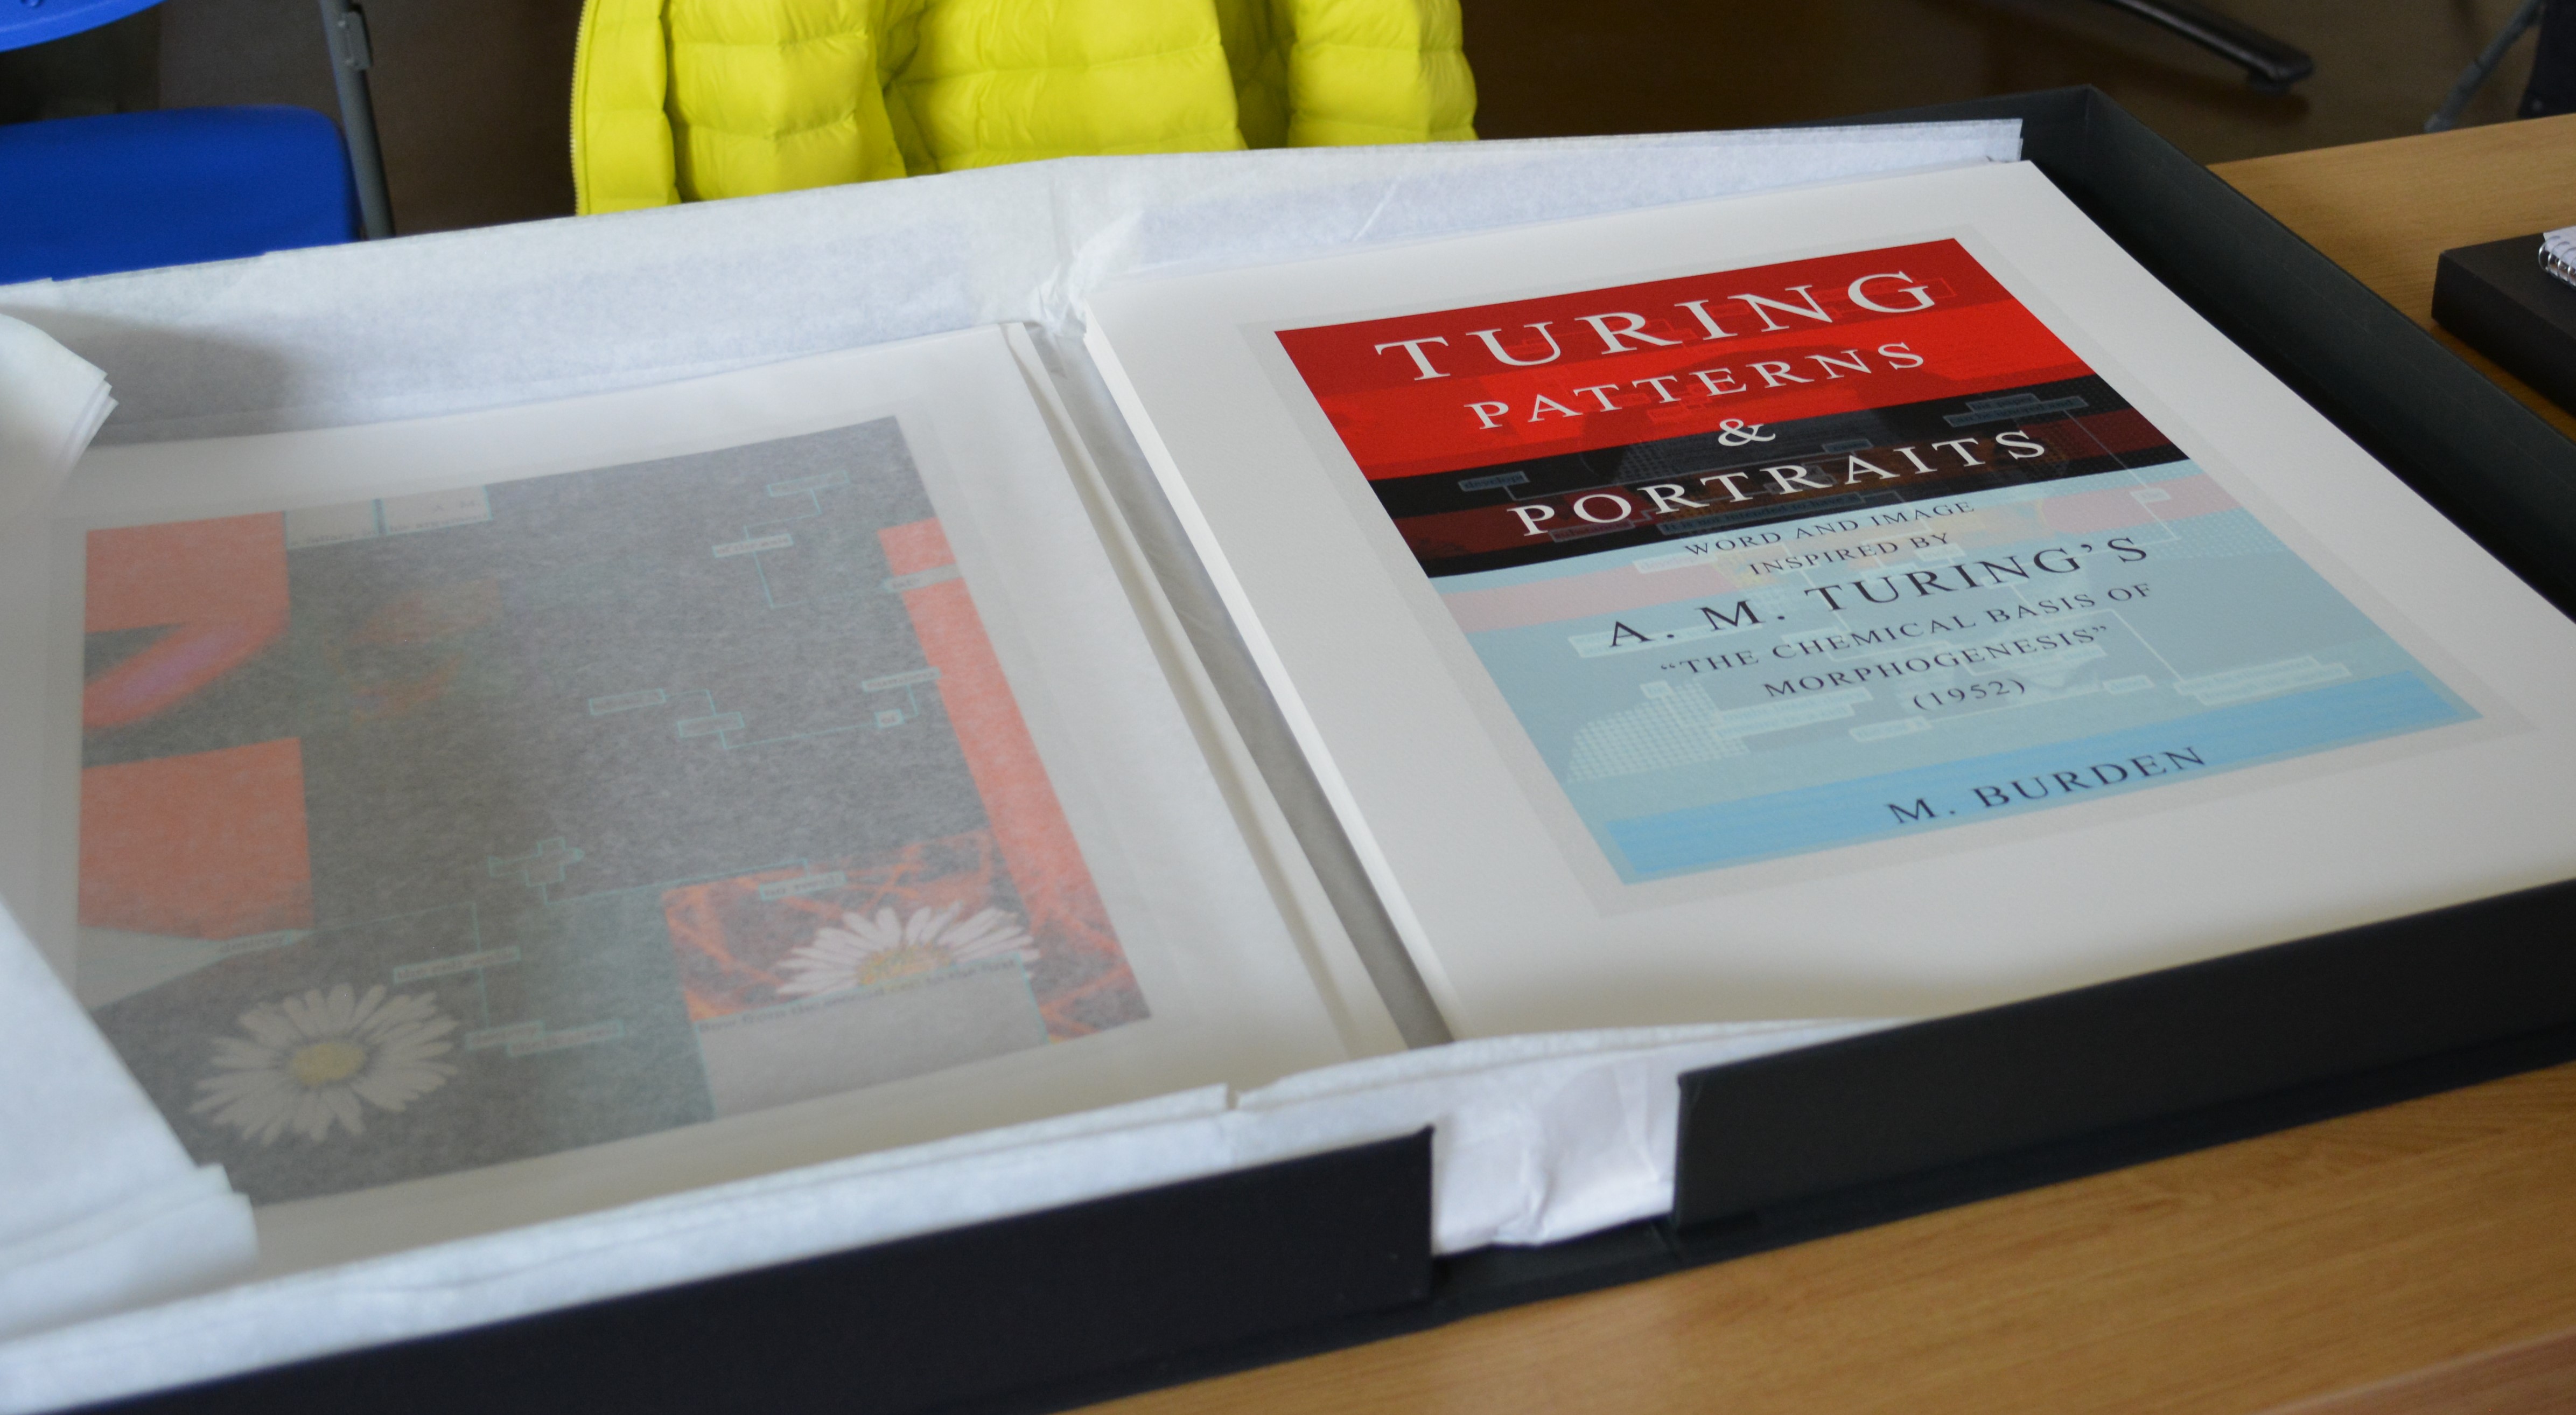 Unboxing Turing artwork by Mark Burden - BSI Sharing 2023